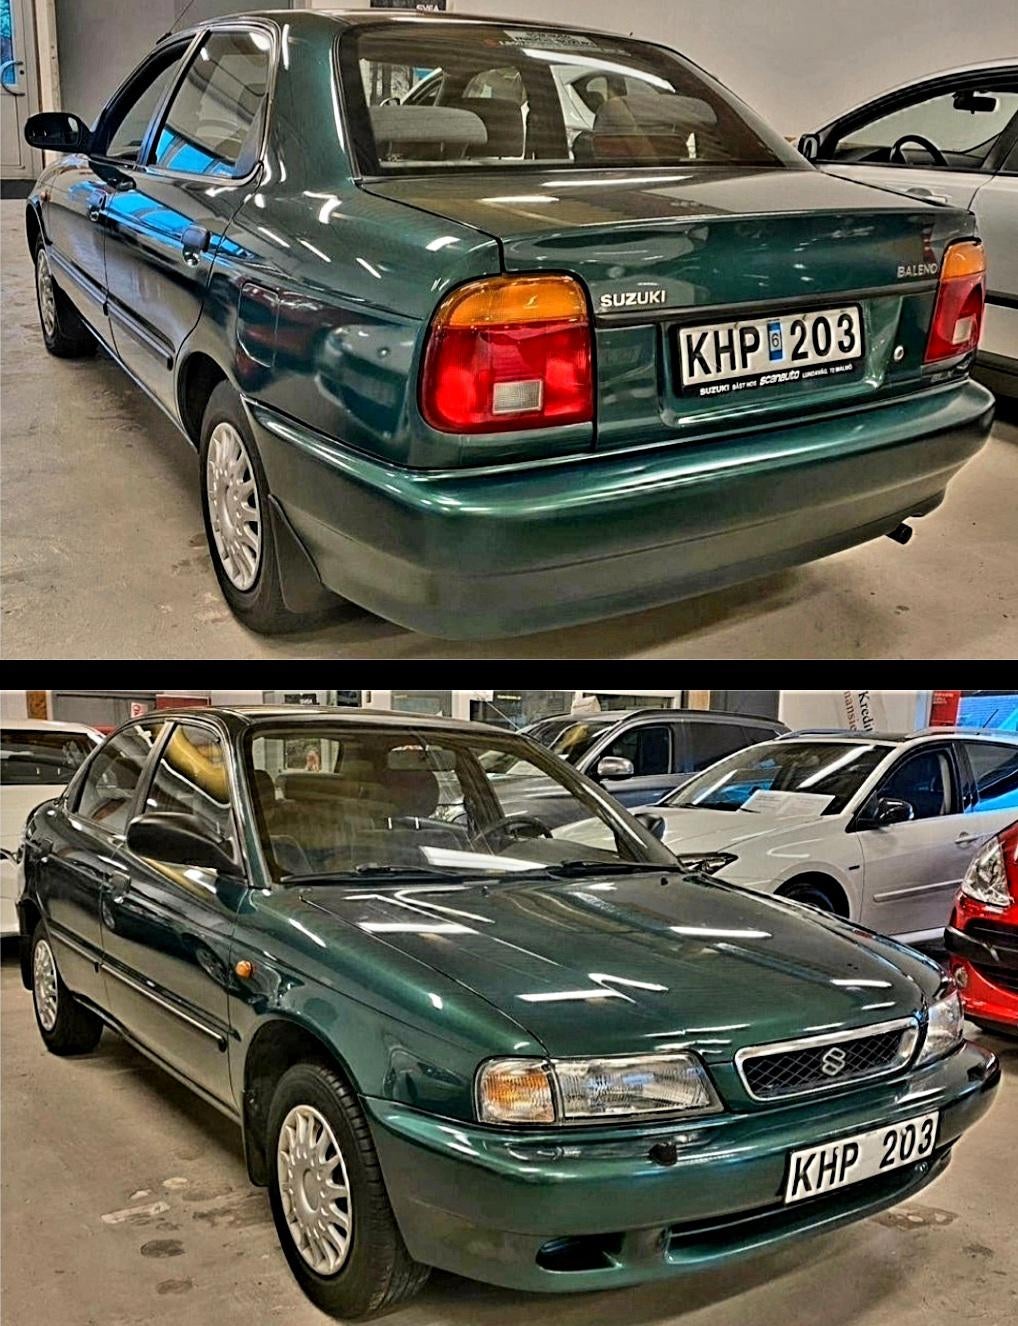 Suzuki Esteem 1.6 1995, 30k miles, 2500$. Apparently in mint condition.  Good buy? : r/whatcarshouldIbuy